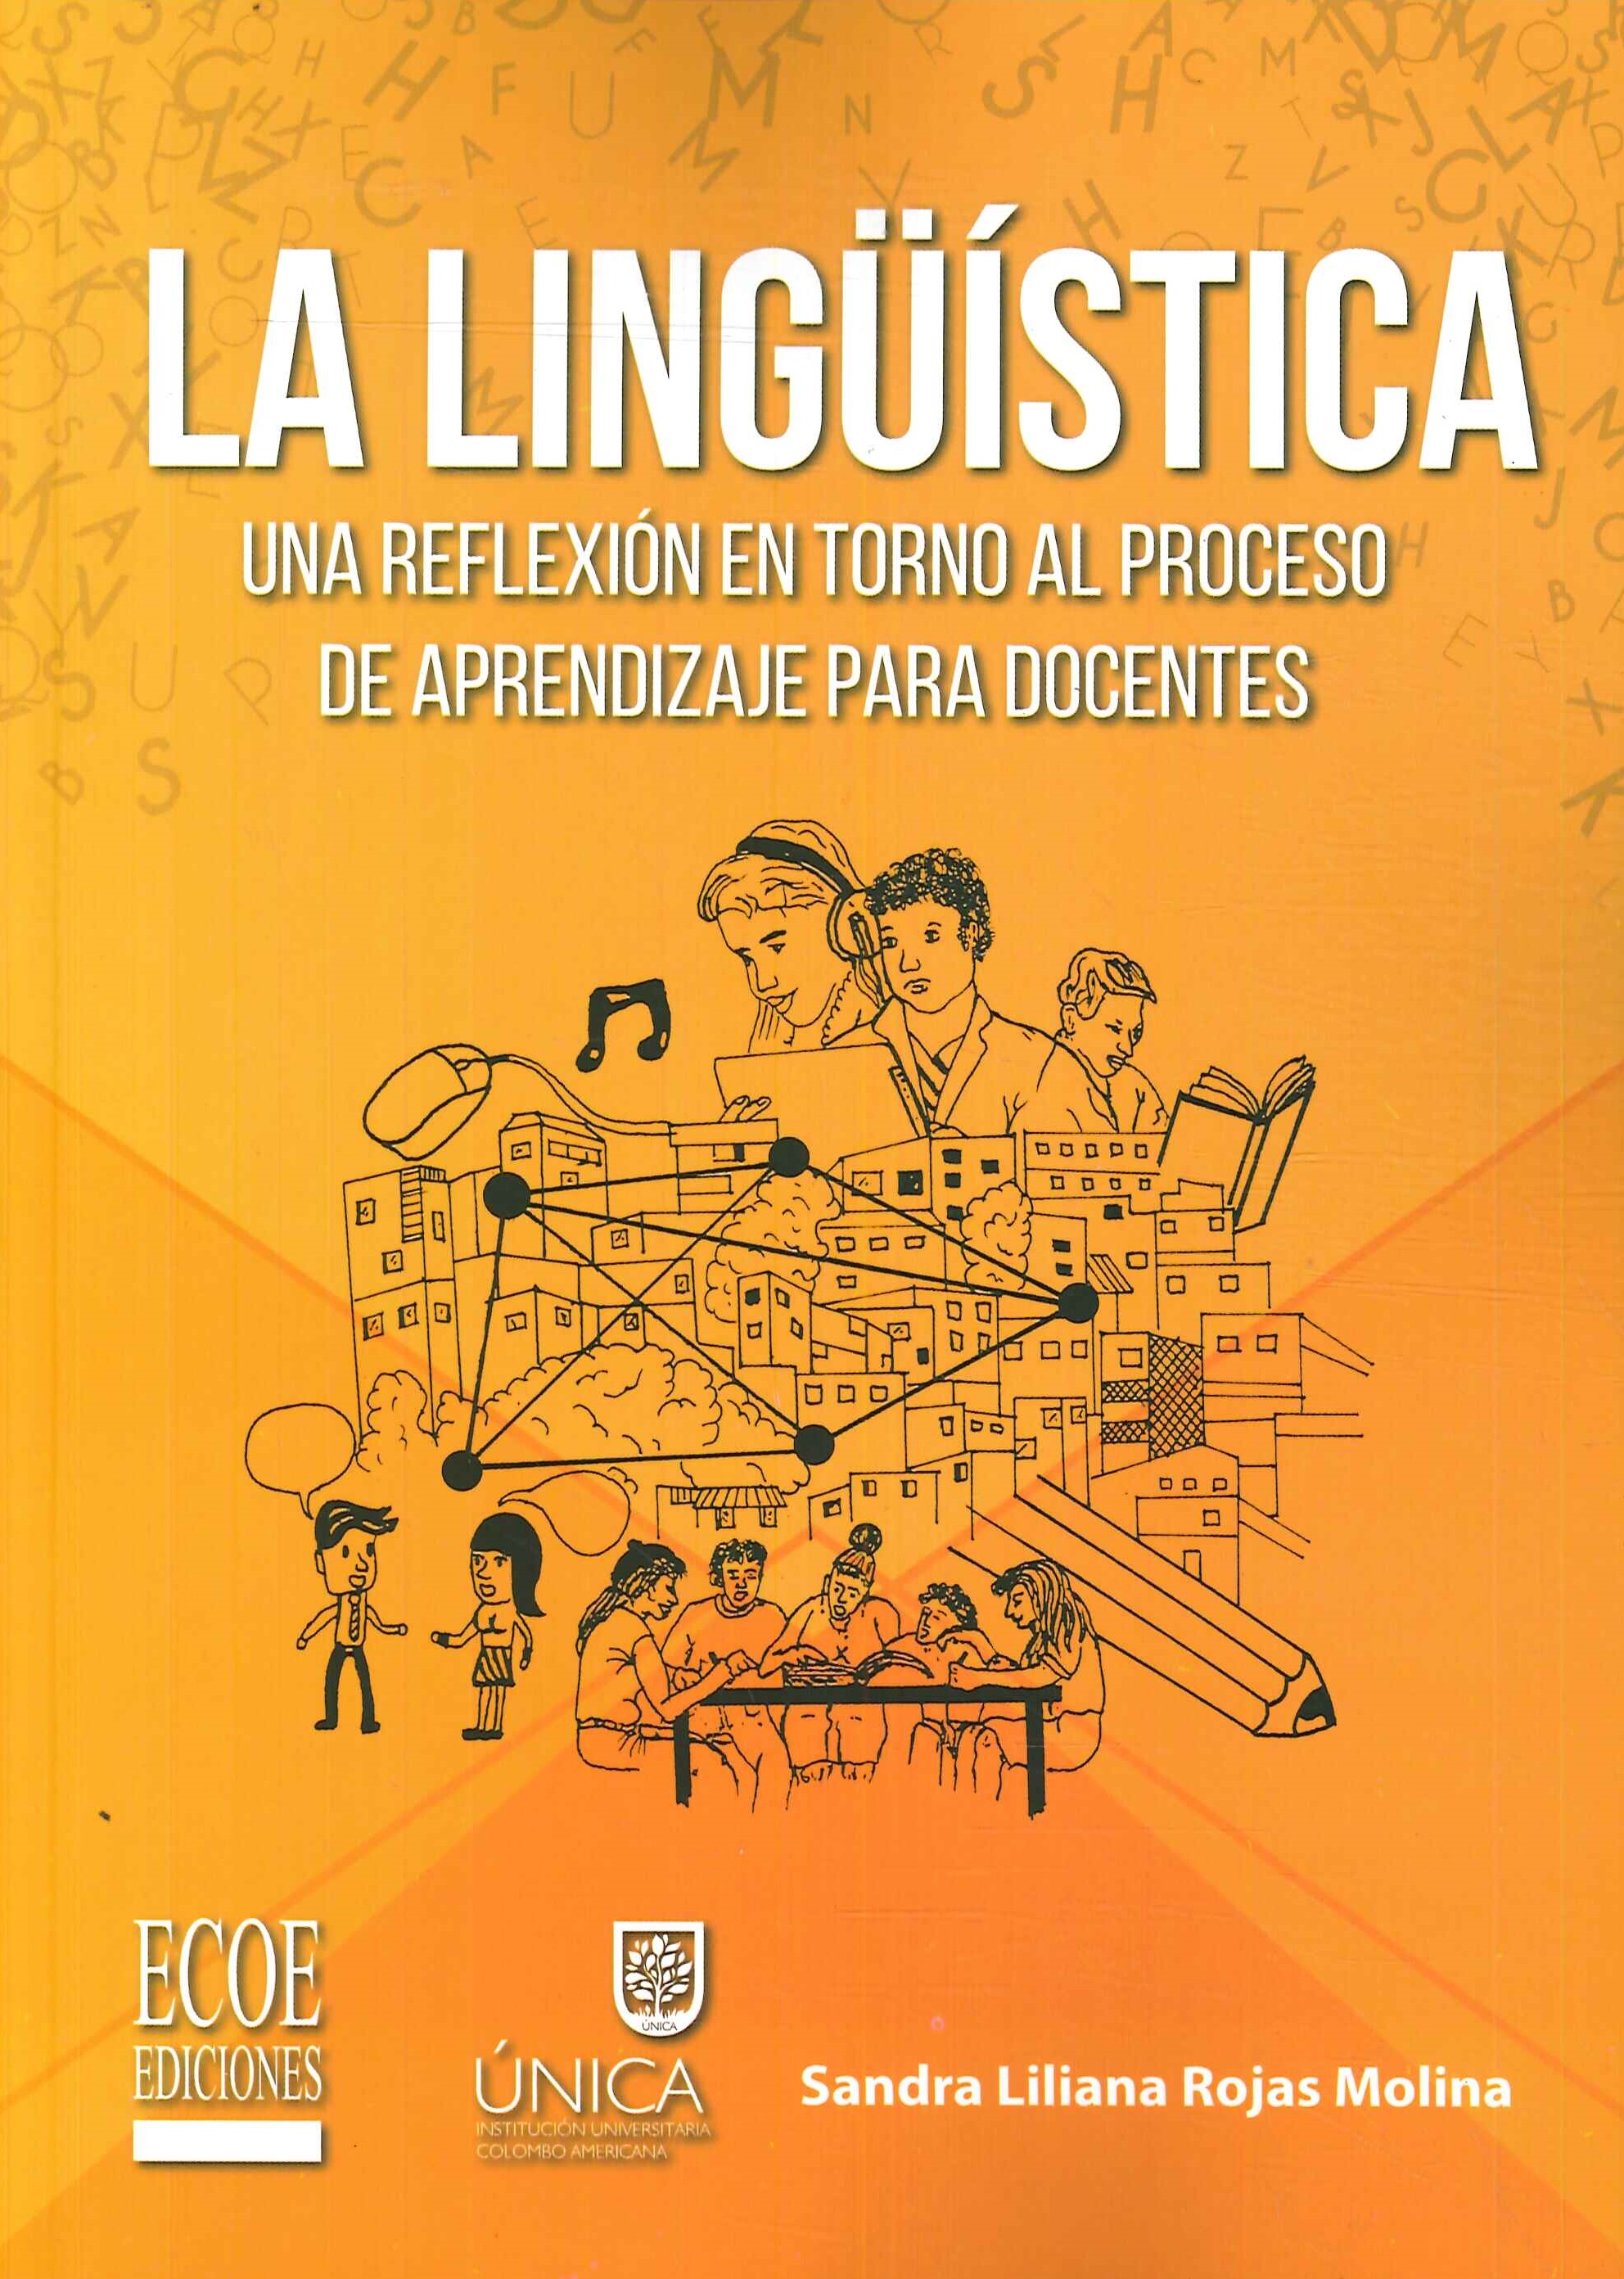 La Lingüística